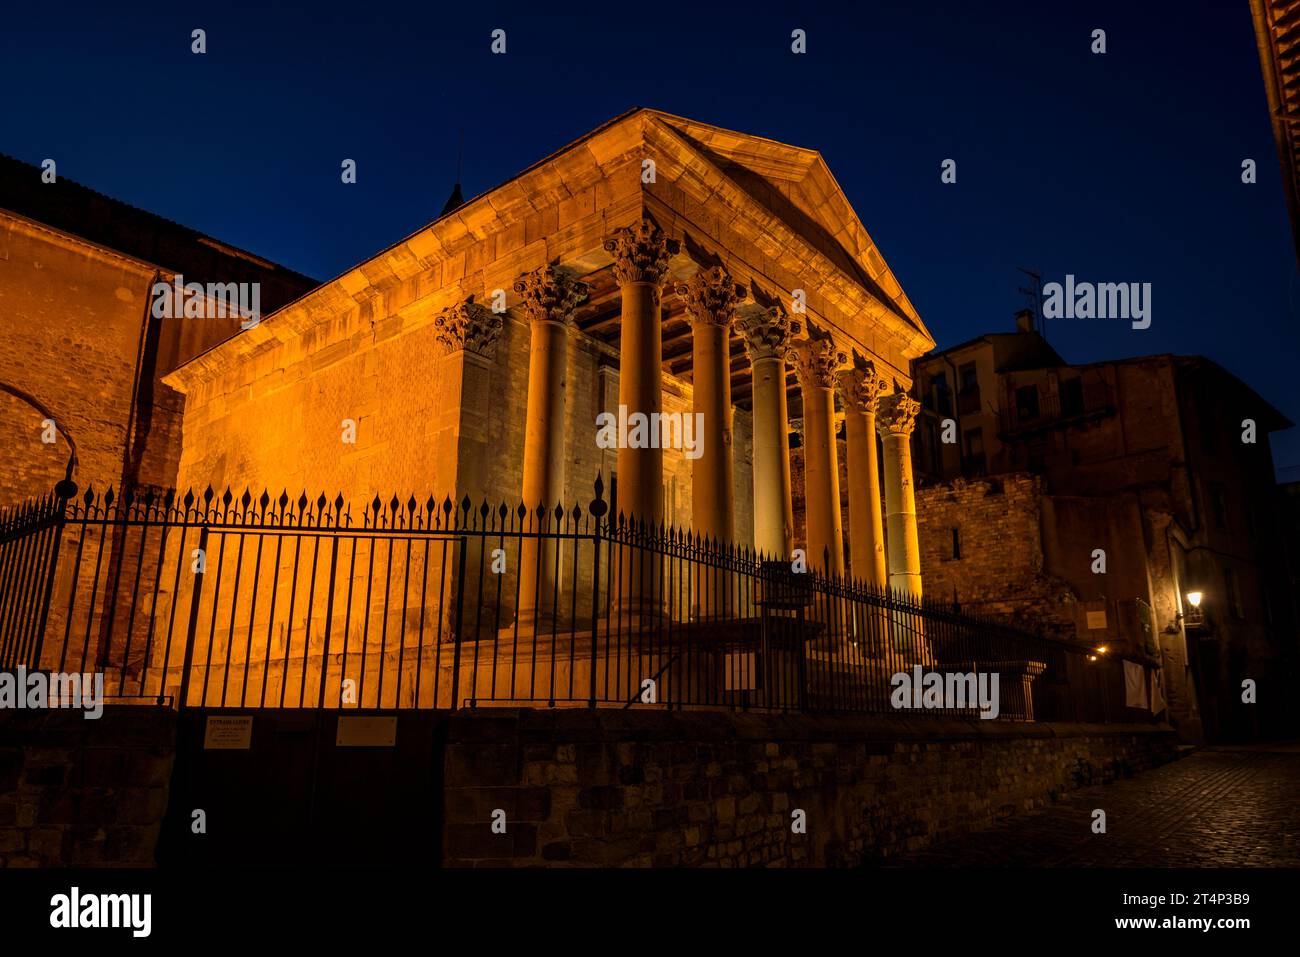 Roman temple of Vic at the blue hour as night falls (Osona, Barcelona, Catalonia, Spain) ESP: Templo romano de Vic en la hora azul y noche, Vic España Stock Photo